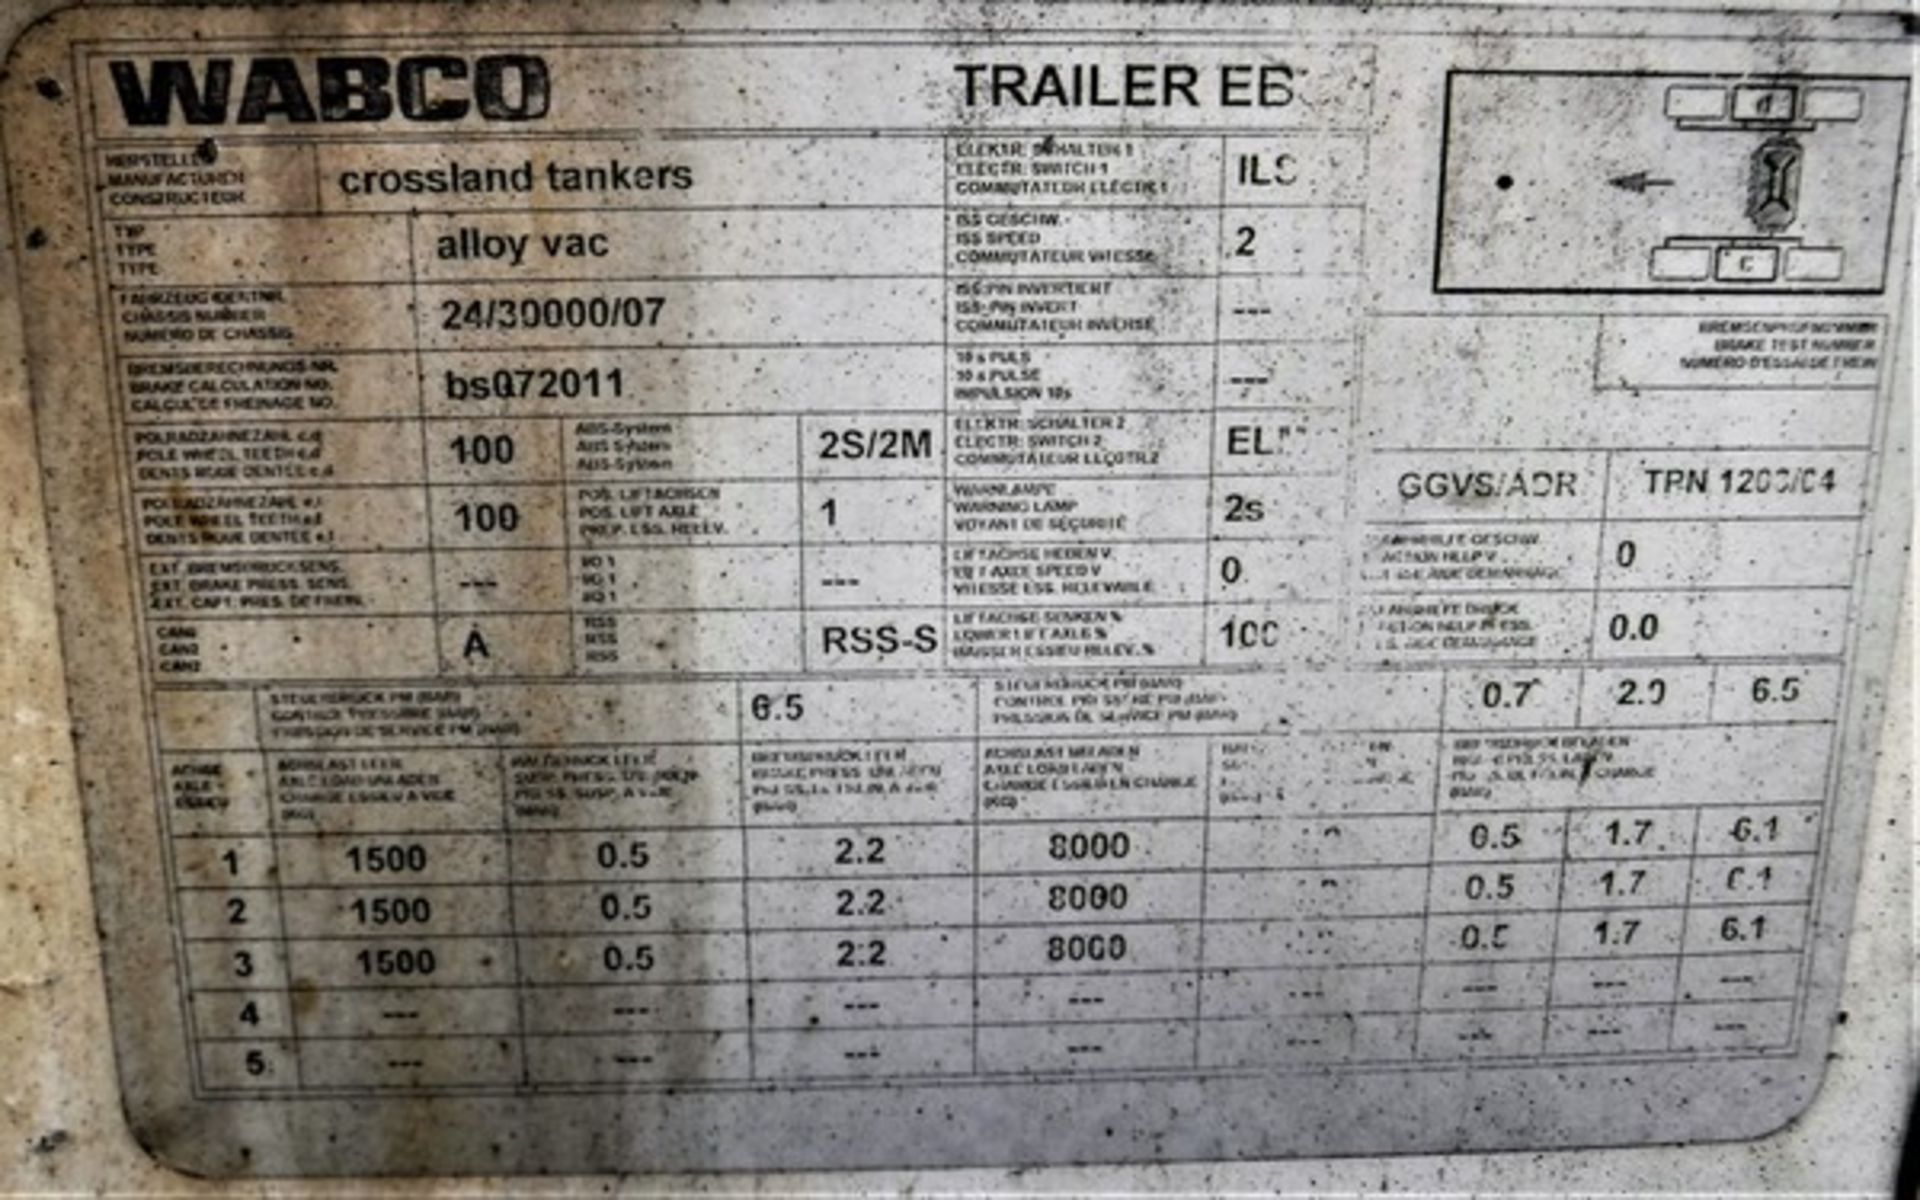 2007 WABCO vacuum tank trailer s/n 24/30000/07 Reg No C233119. Triple axle. GVW 38180kg 30.11.18 c - Image 5 of 17